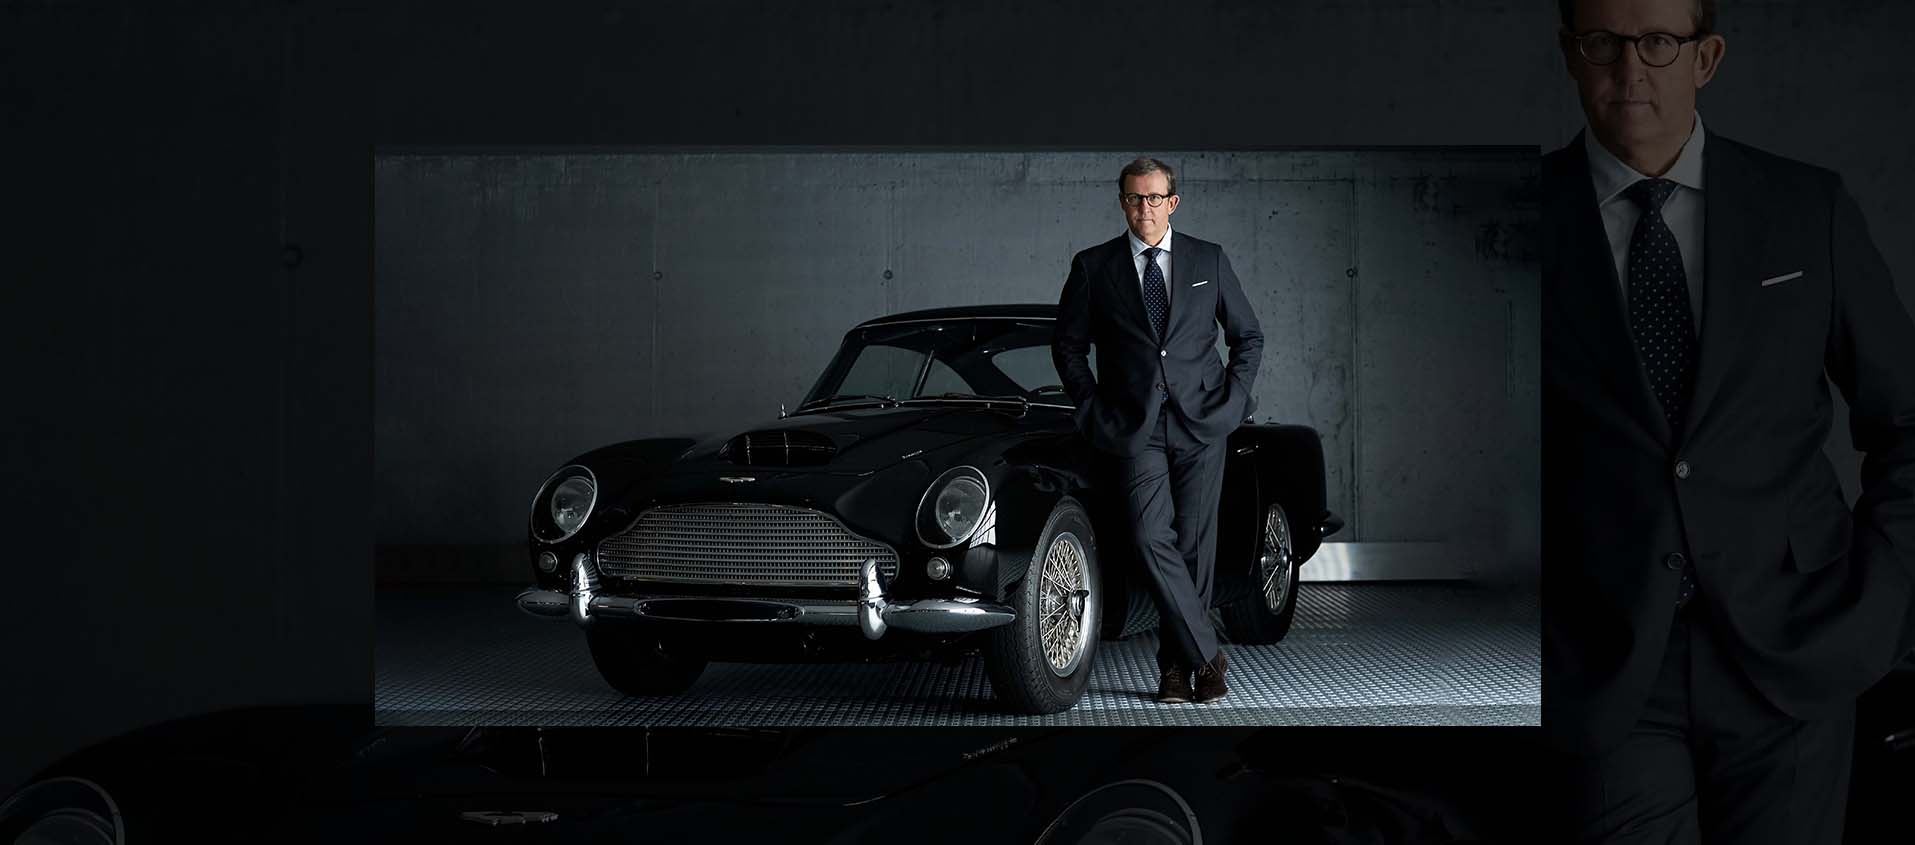 James Bond? No, Fritz Kaiser awarded image